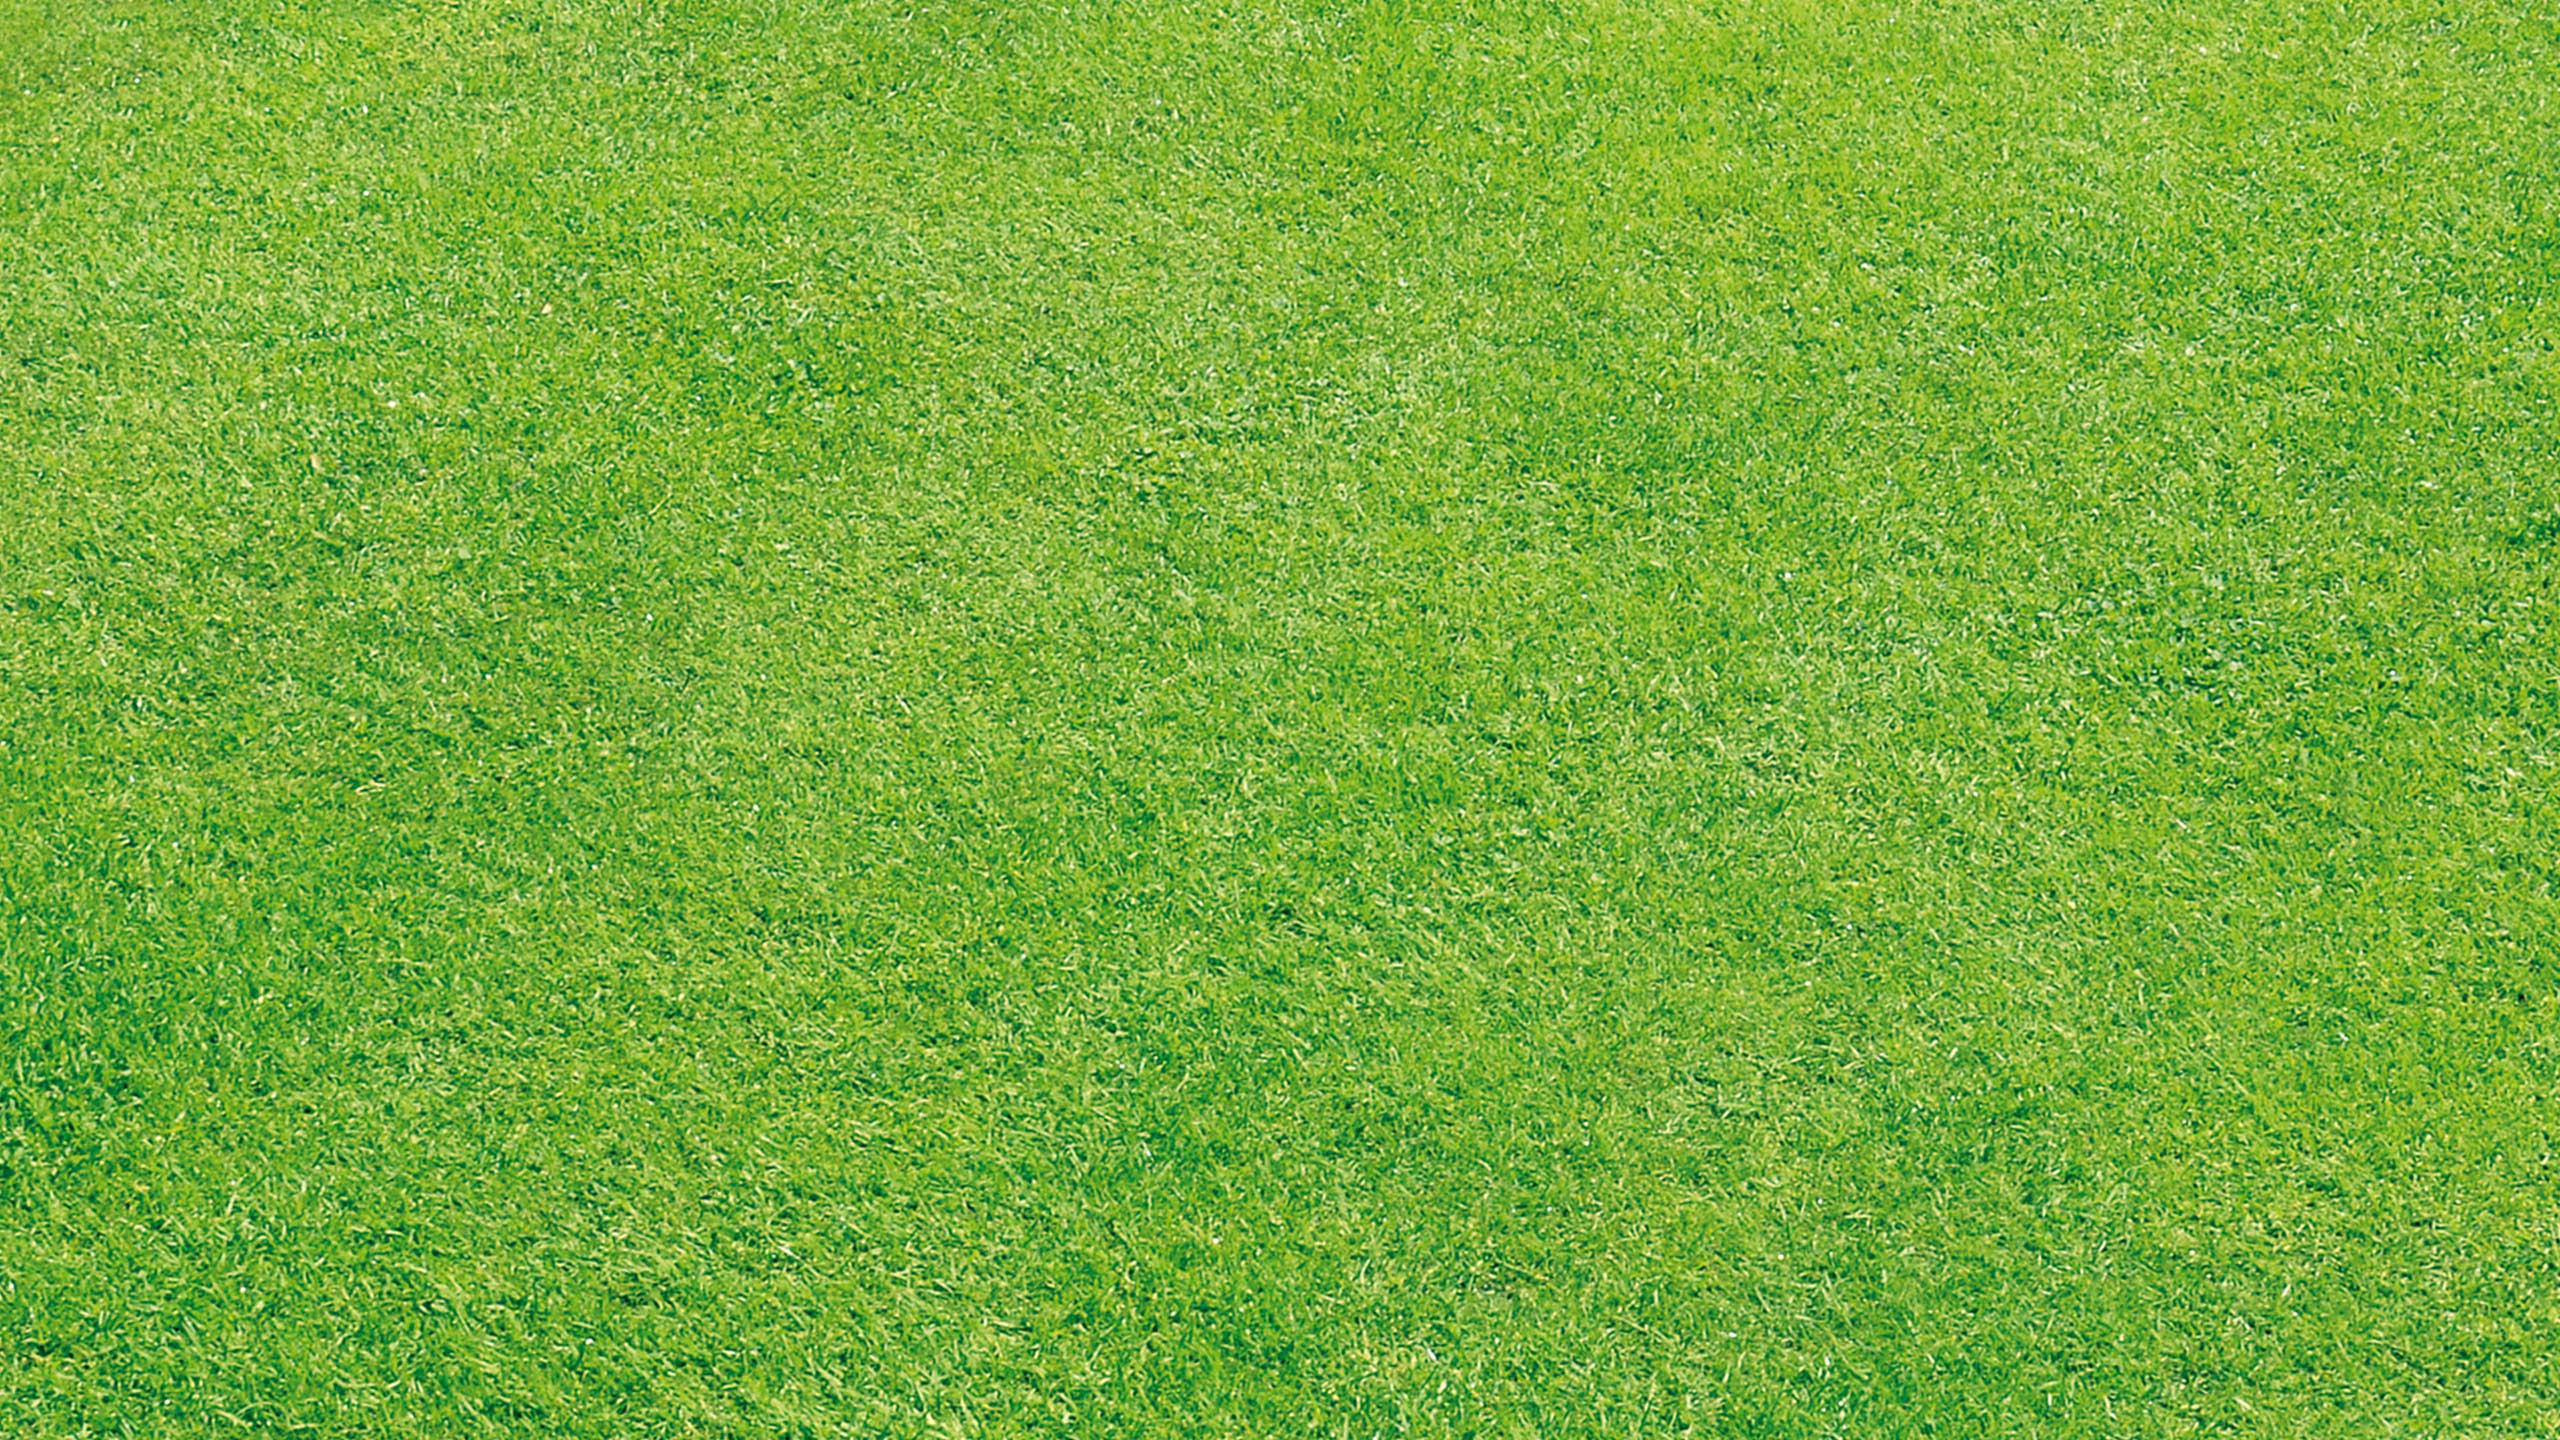 Green Grass Field During Daytime. Wallpaper in 2560x1440 Resolution